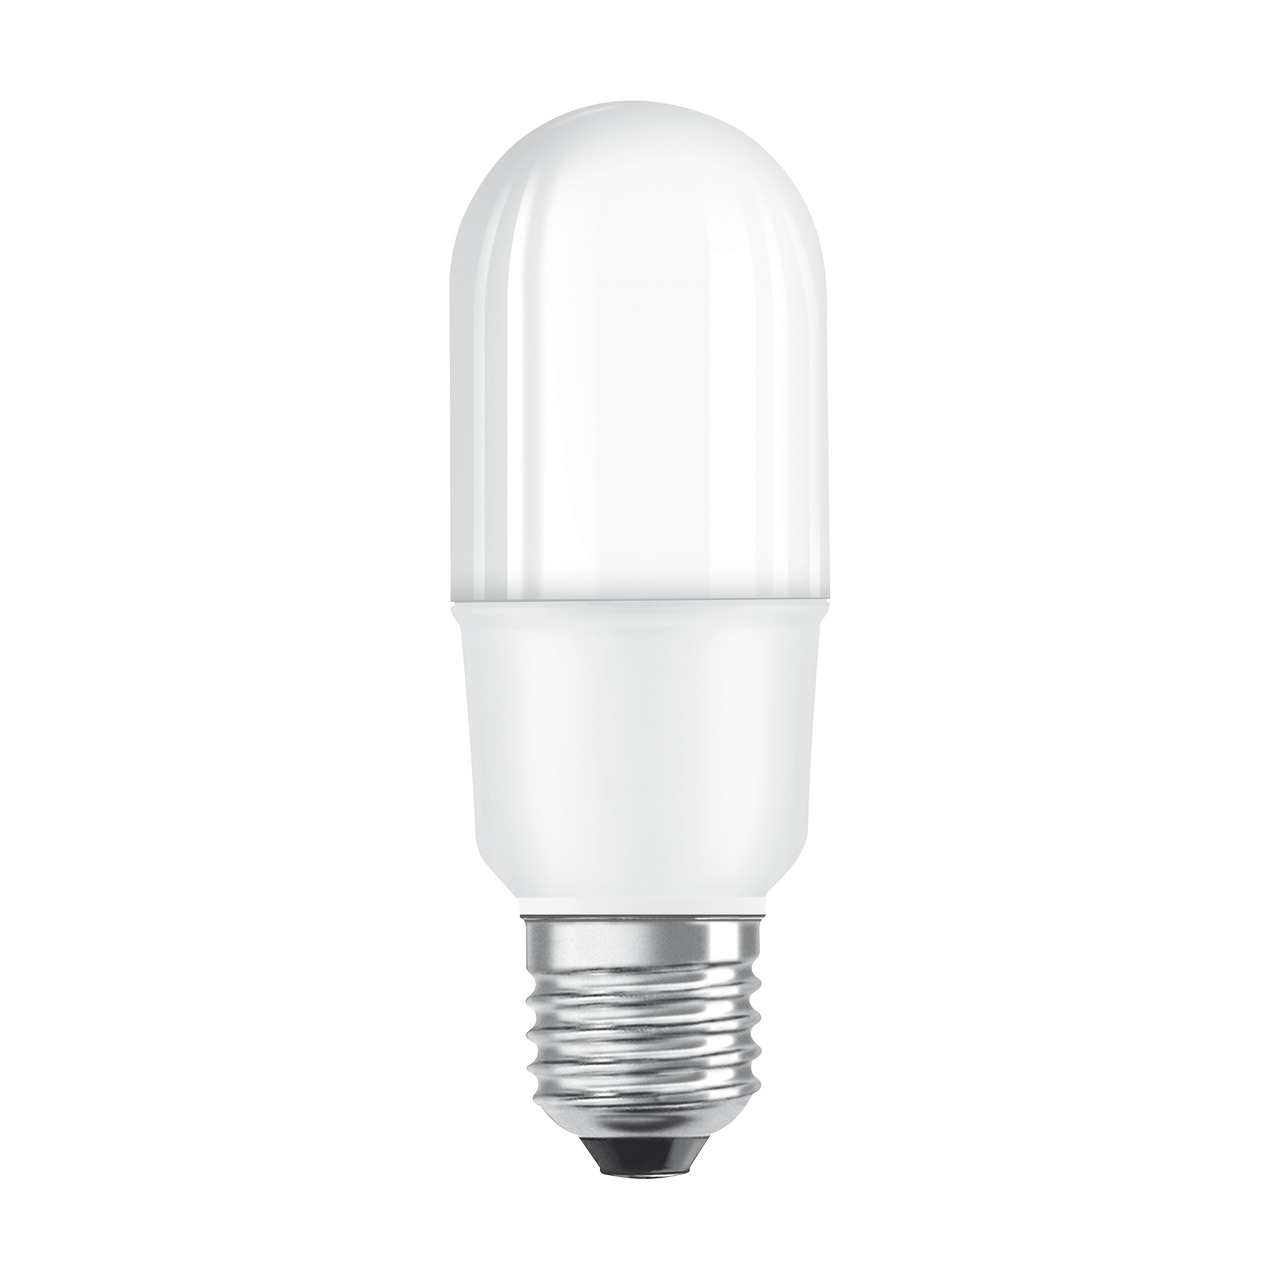 OSRAM LED STAR 9-W-LED-Lampe E27- warmweiss- schlanke Ausf黨rung- Ersatz f黵 75-W-Gl黨lampen